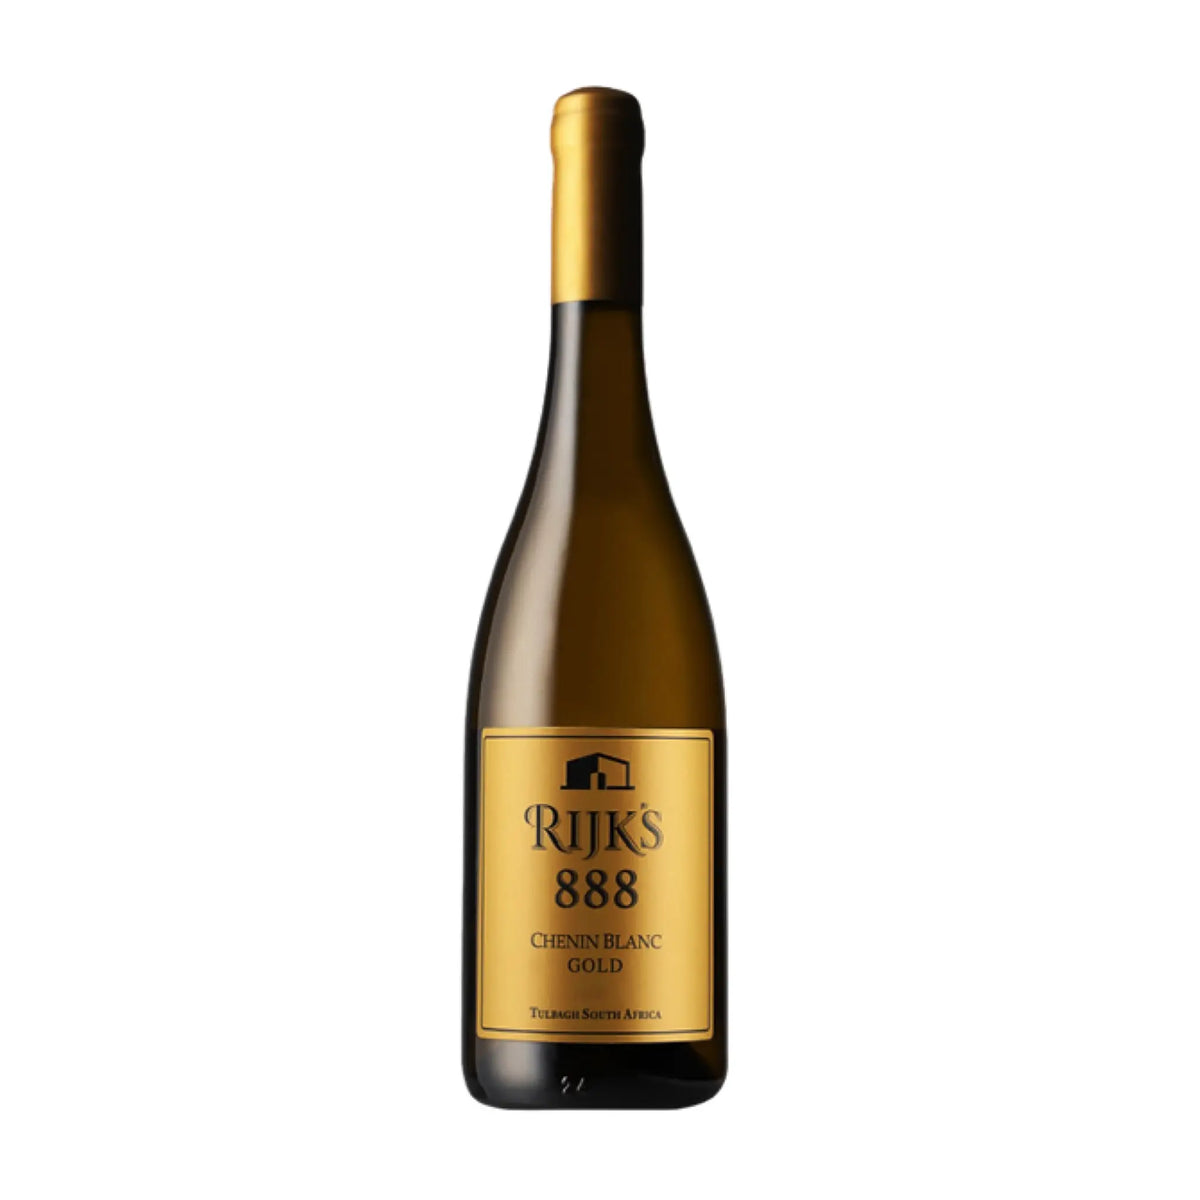 Rijk's Wine Estate-Weißwein-Chenin Blanc-Südafrika-Tulbagh-2018 Chenin Blanc 888 Gold-WINECOM